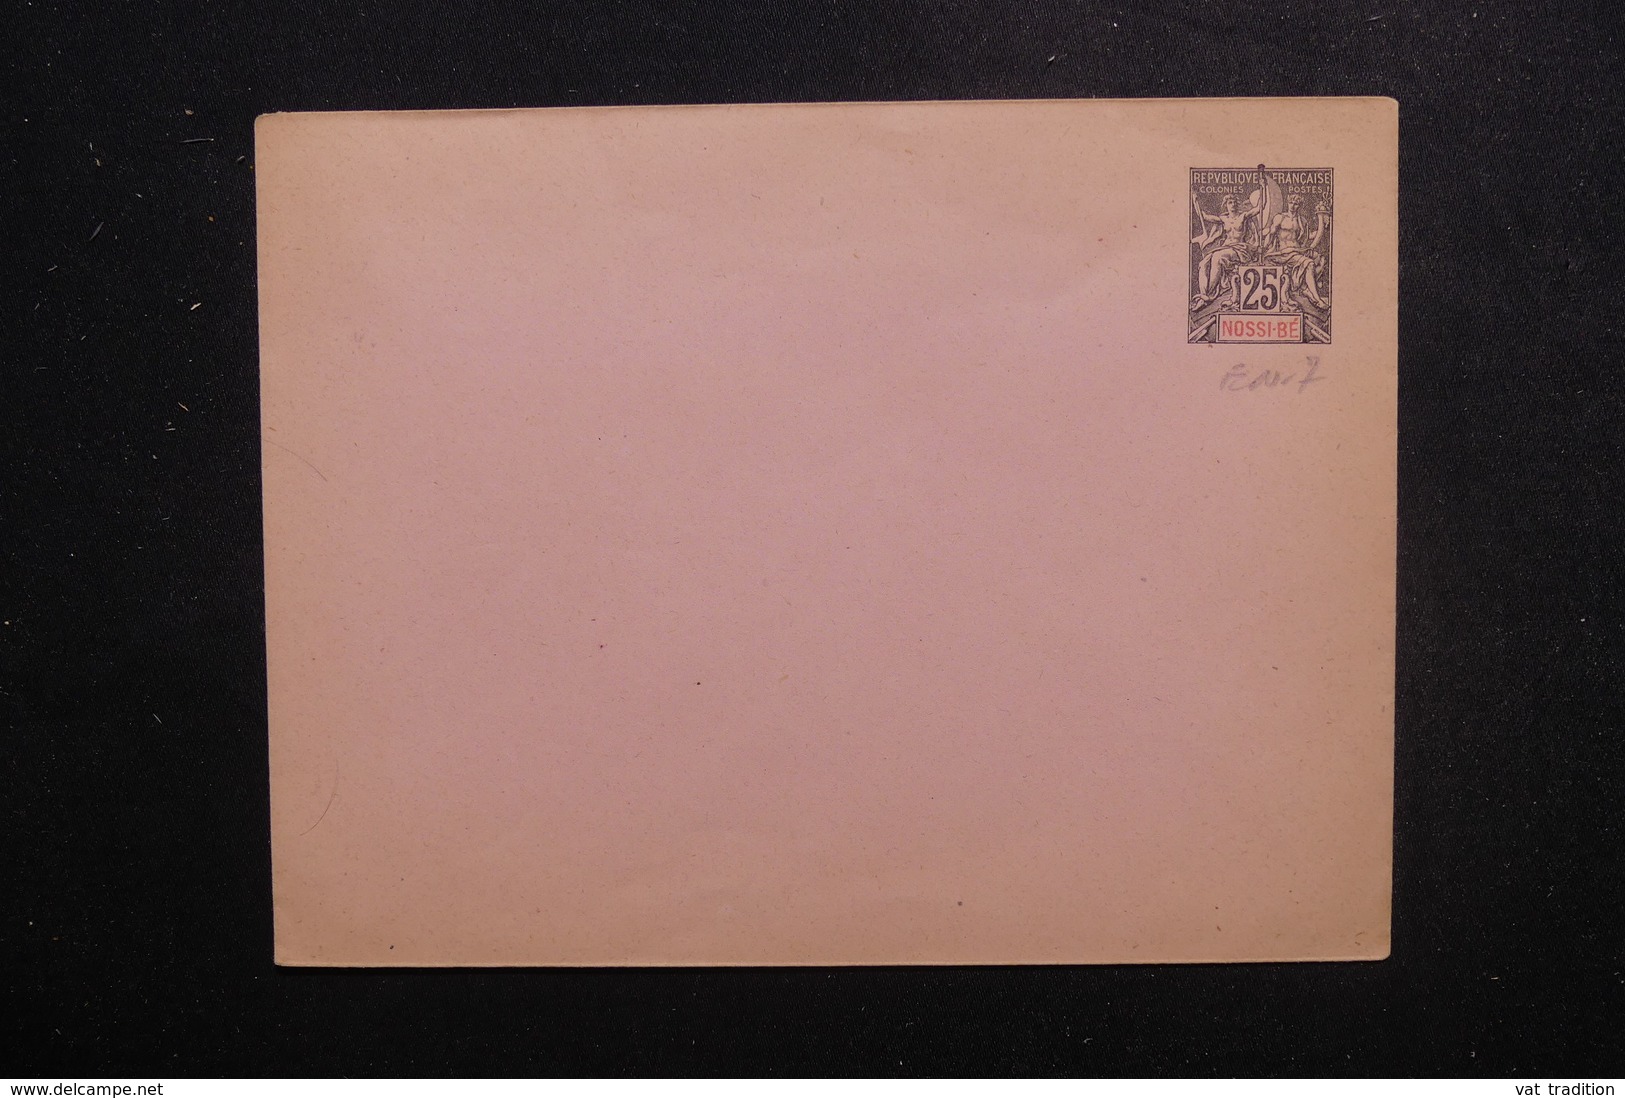 NOSSI BE - Entier Postal Type Groupe, Non Circulé - L 49474 - Storia Postale